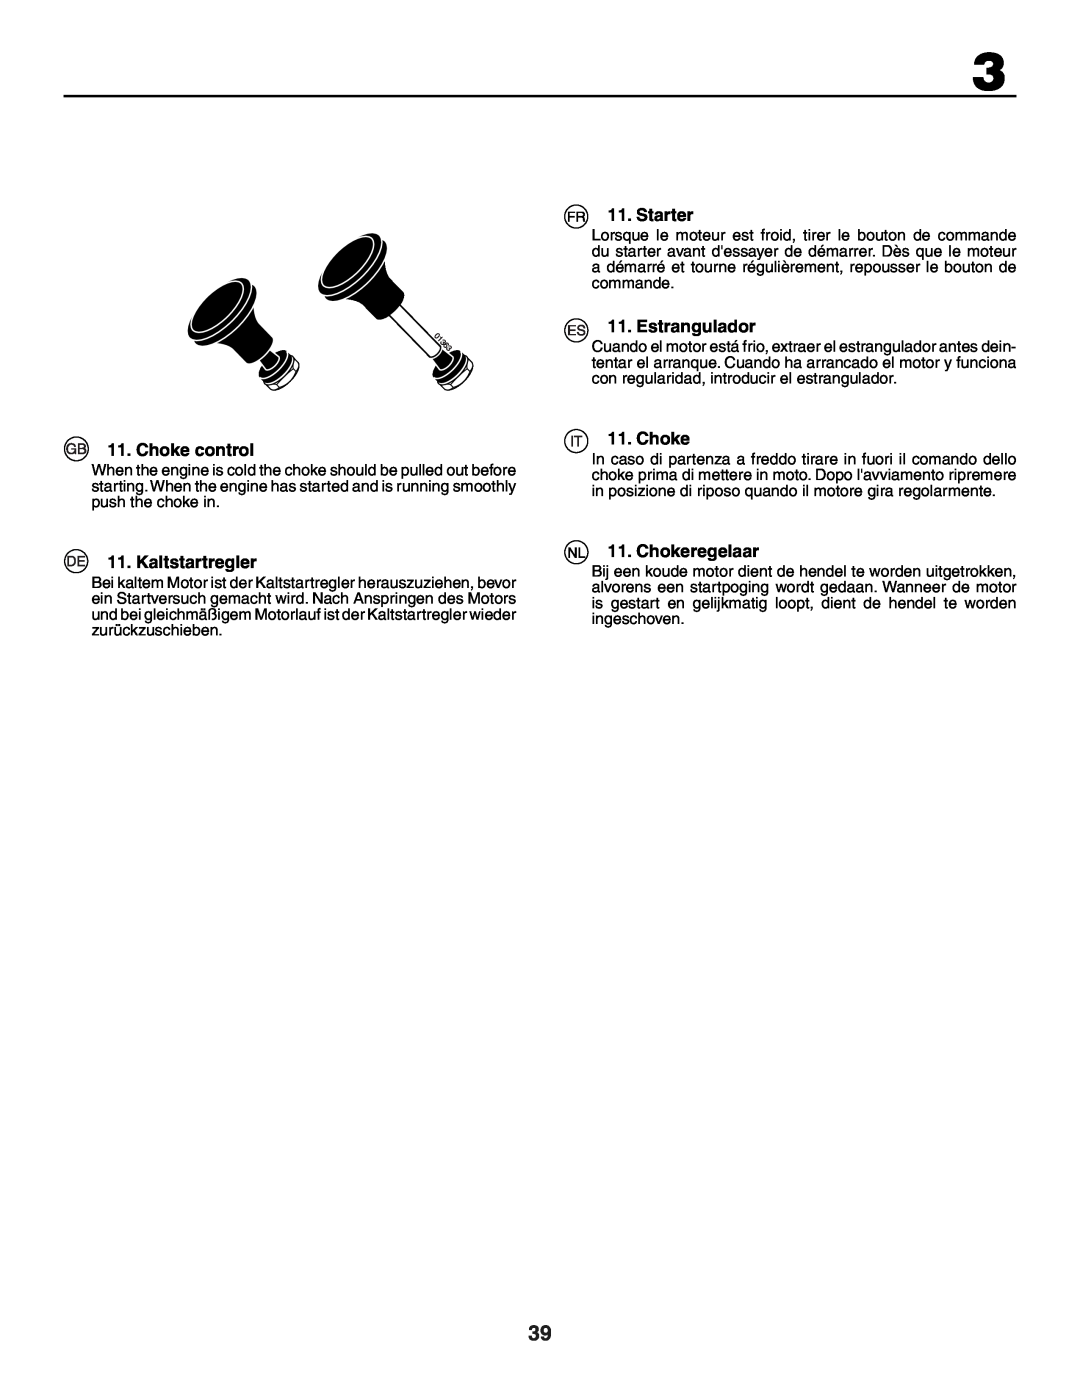 Husqvarna GTH250XP instruction manual Choke control, Kaltstartregler, Starter, Estrangulador, Chokeregelaar 